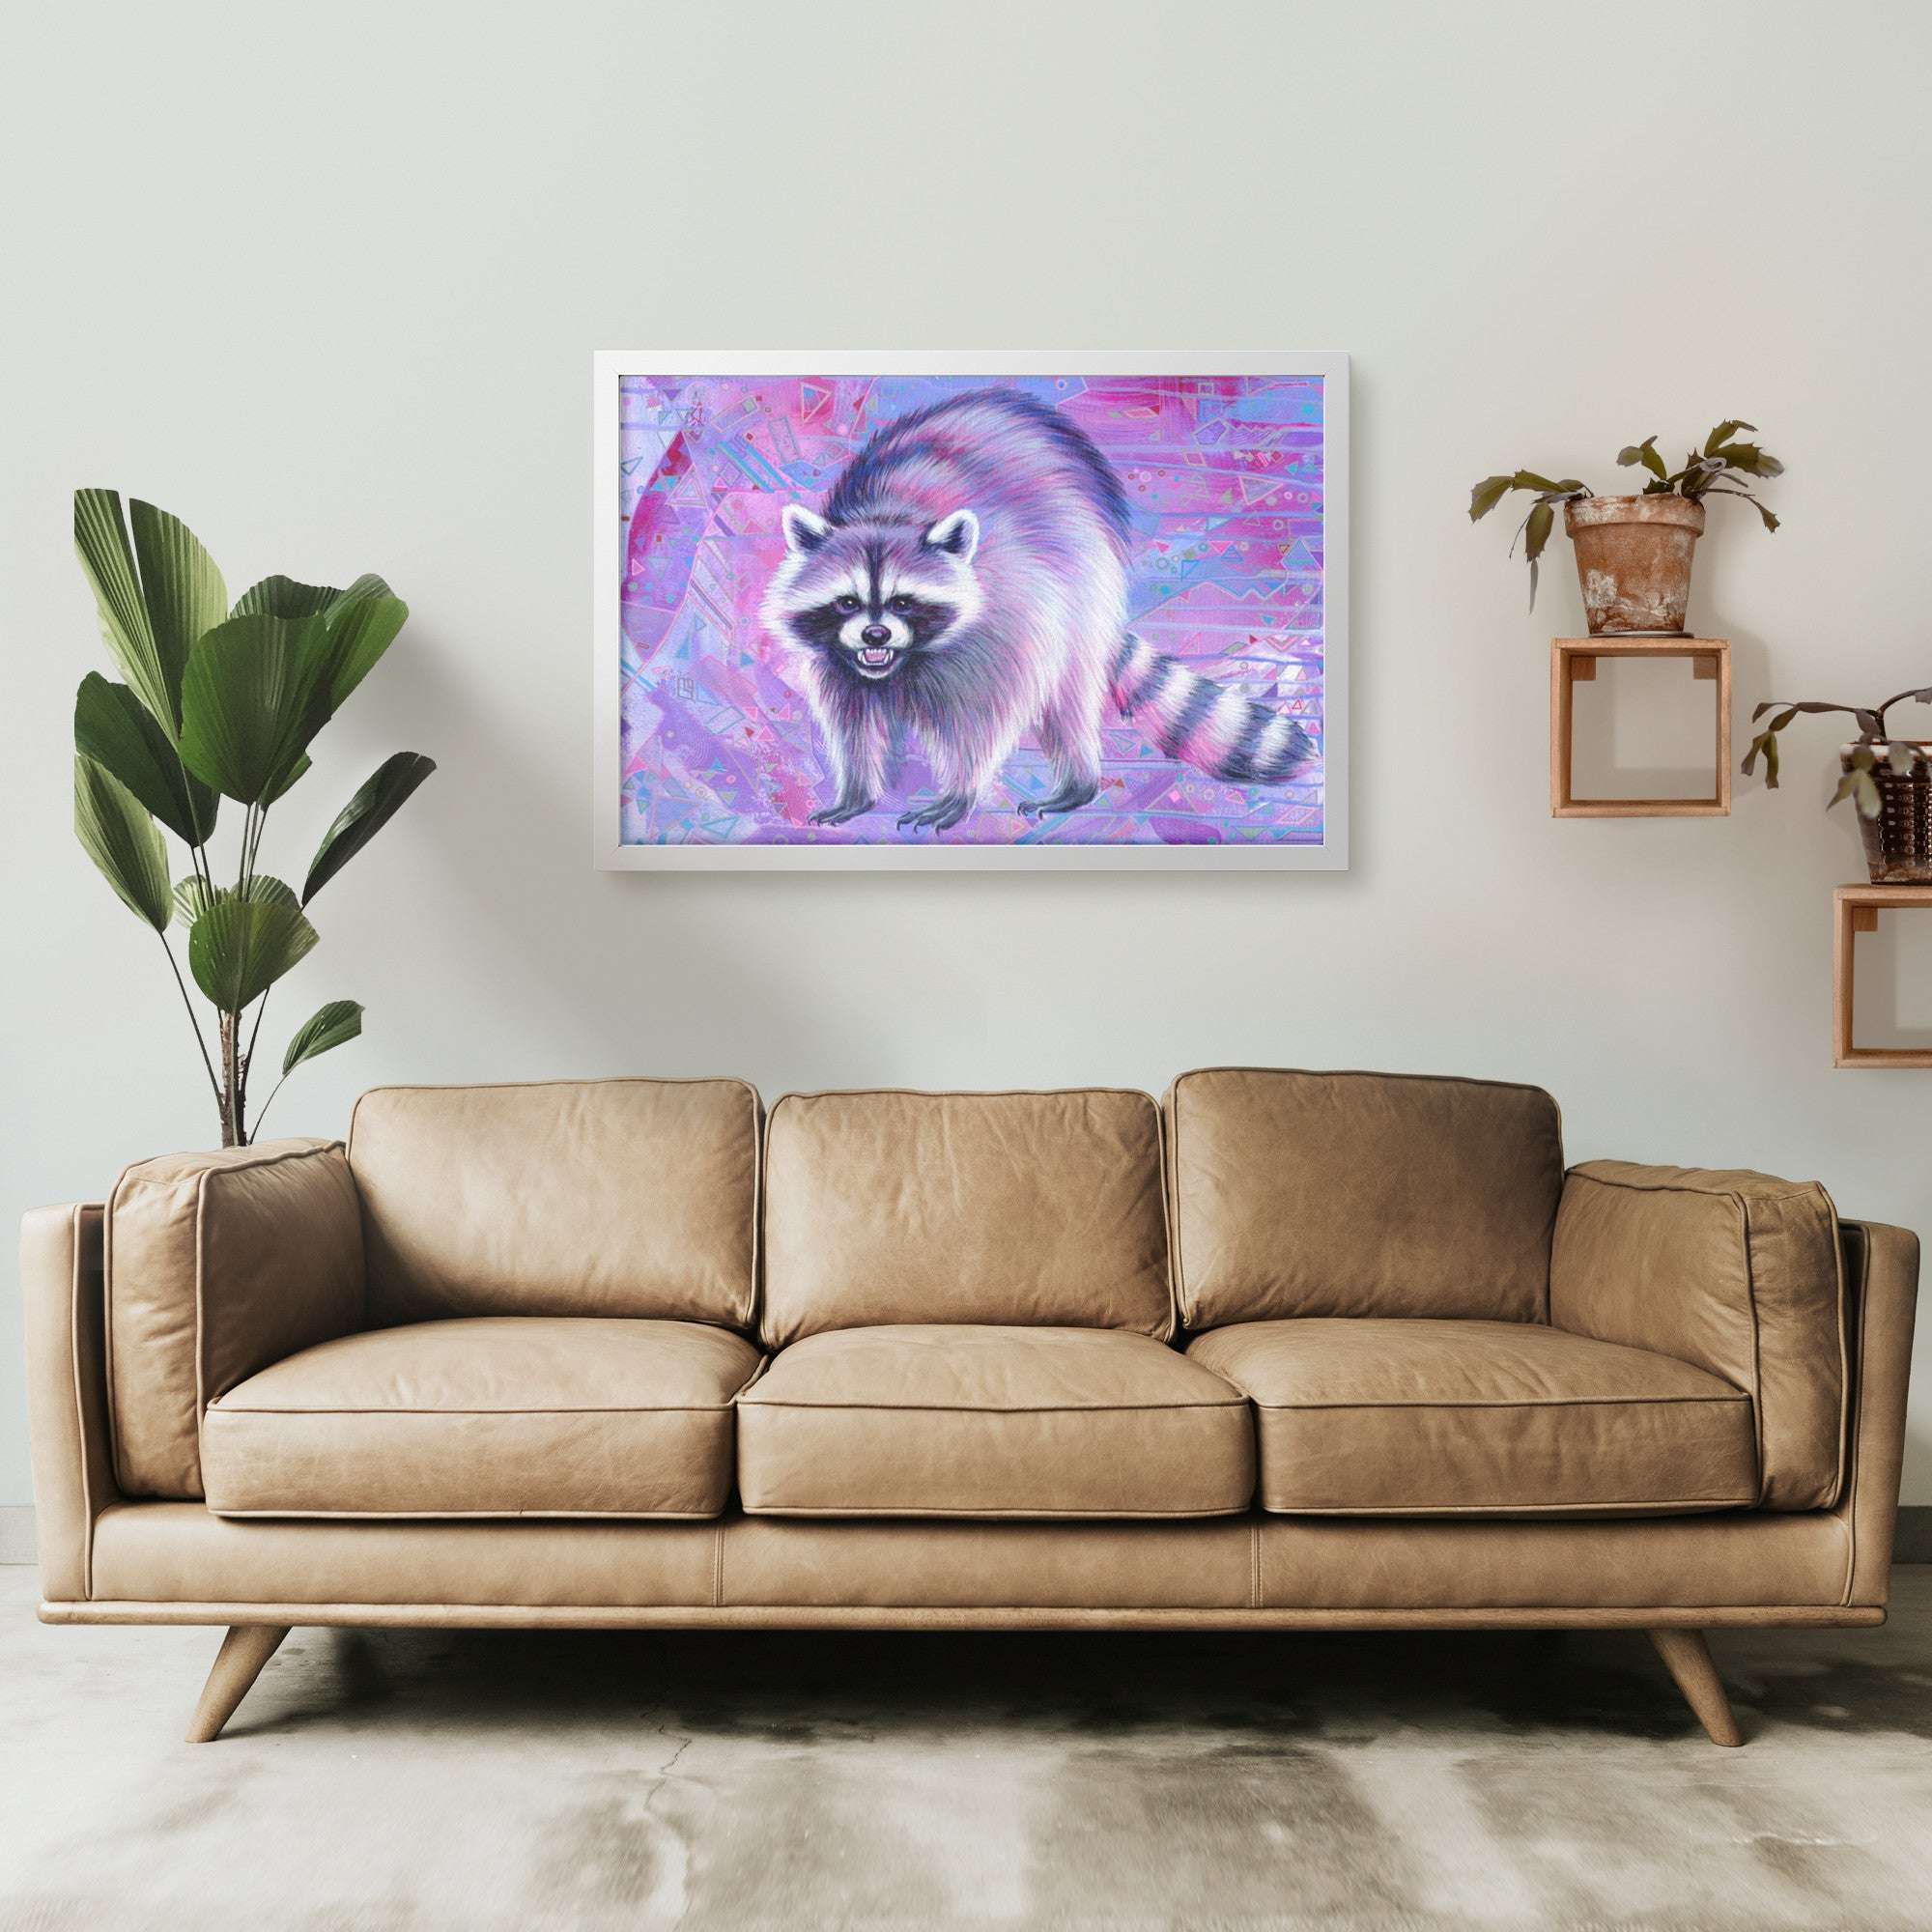 Vibrant Framed Raccoon Art Print hangs above a sofa in a modern living room.